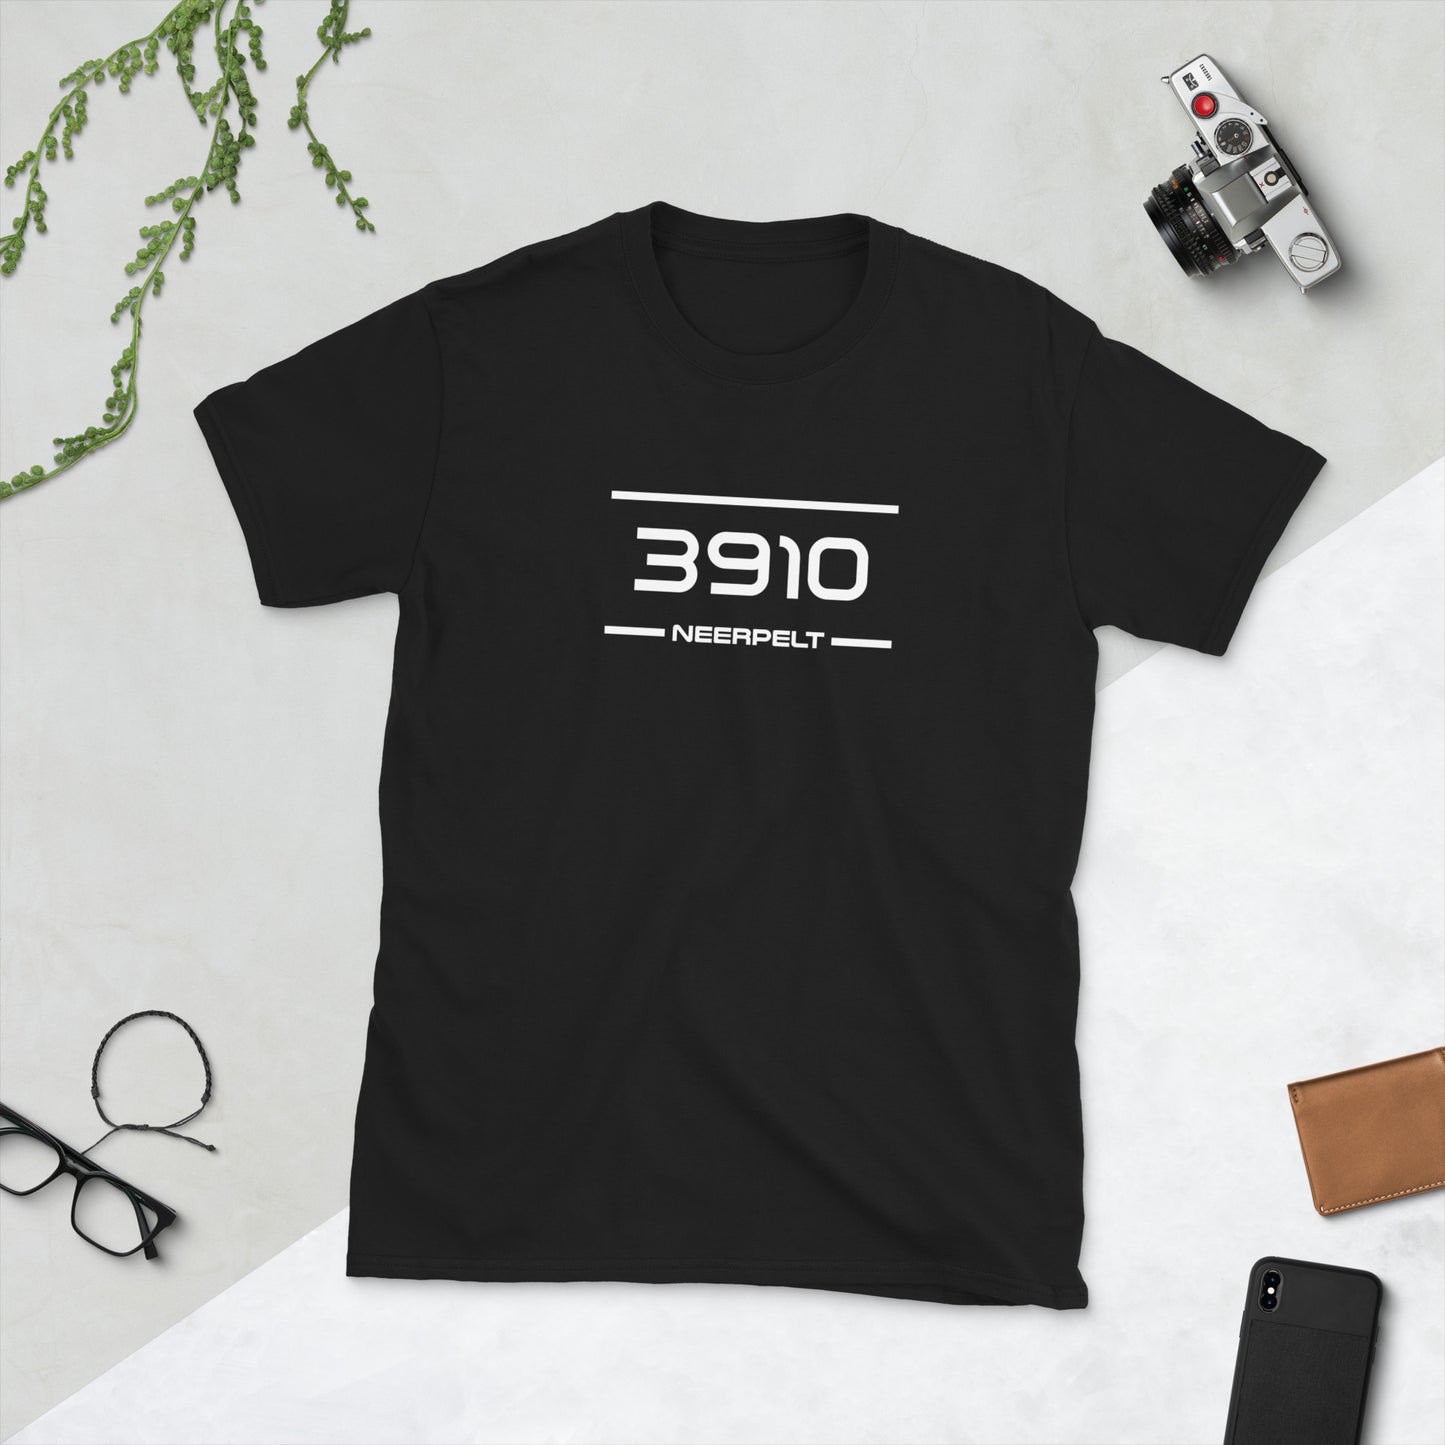 Tshirt - 3910 - Neerpelt